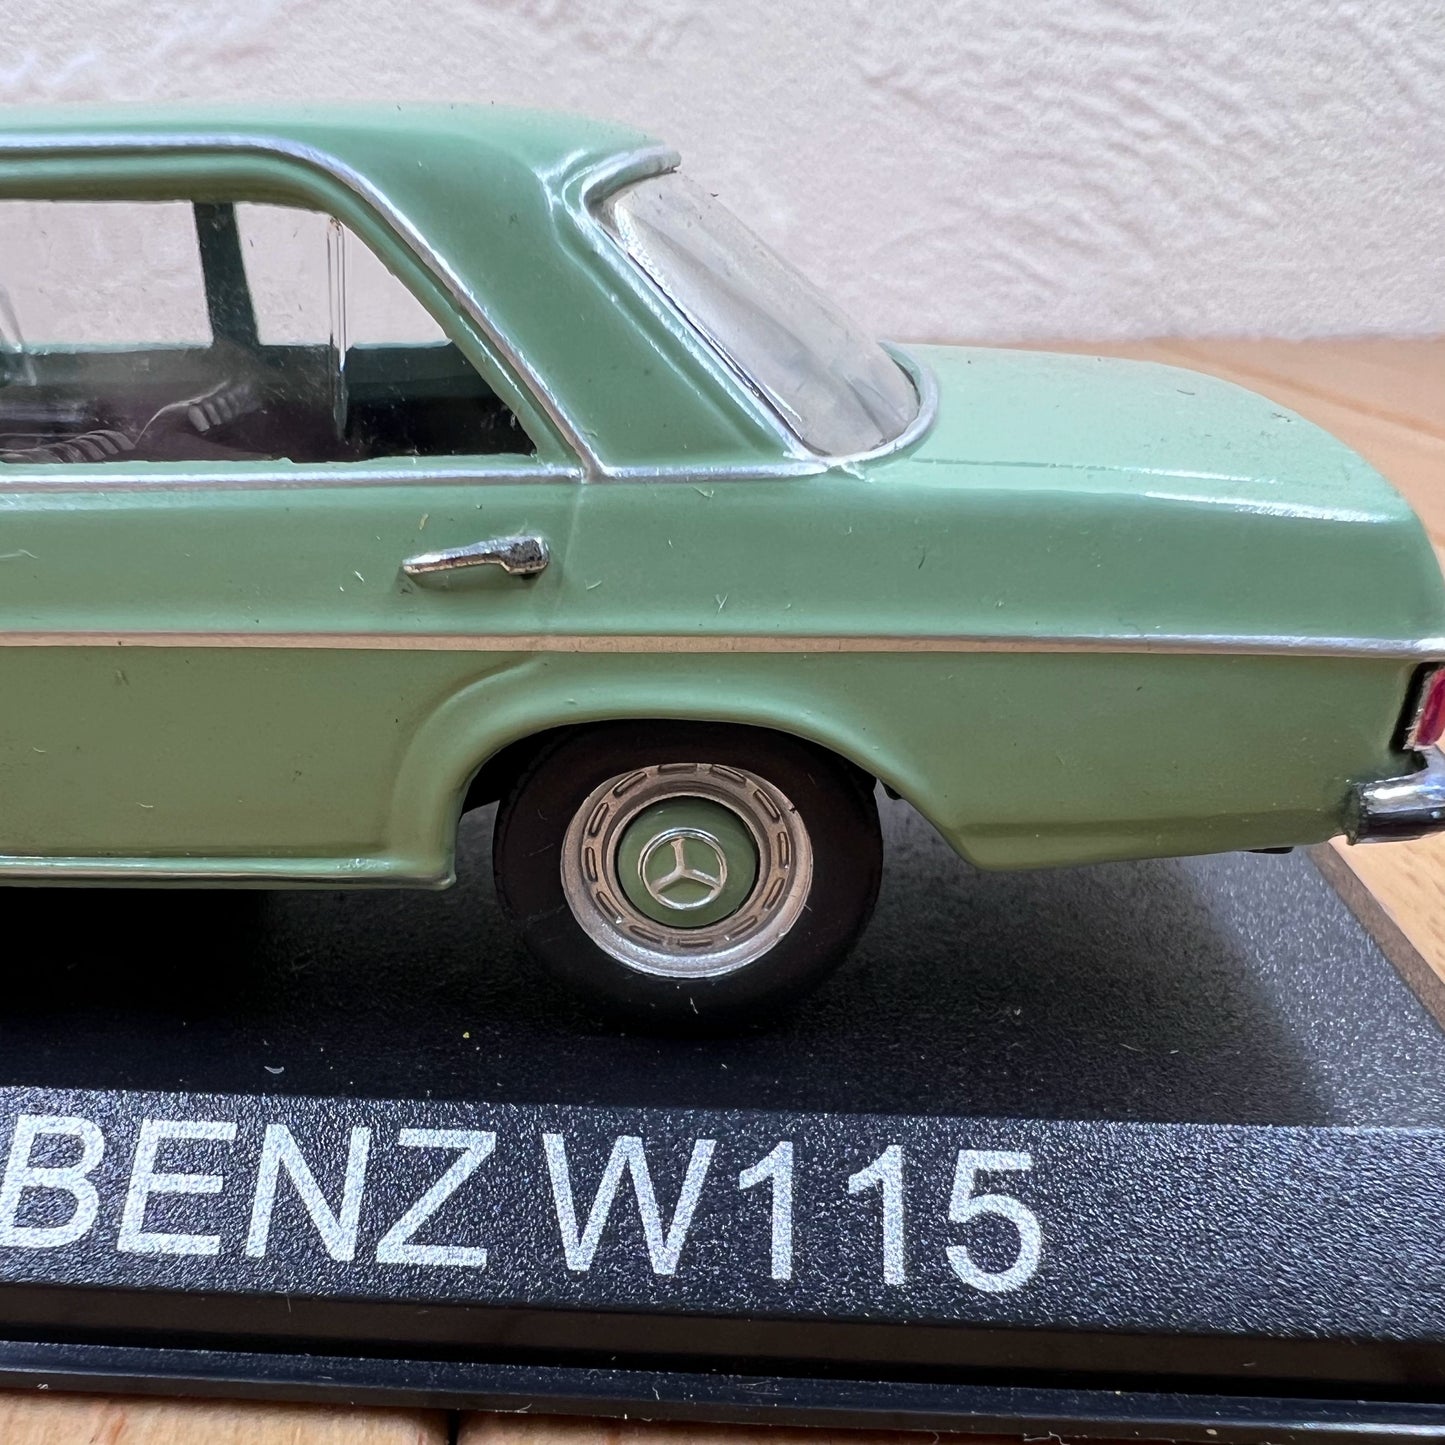 1/43 Scale Mercedes-Benz W115 Diecast Model Car